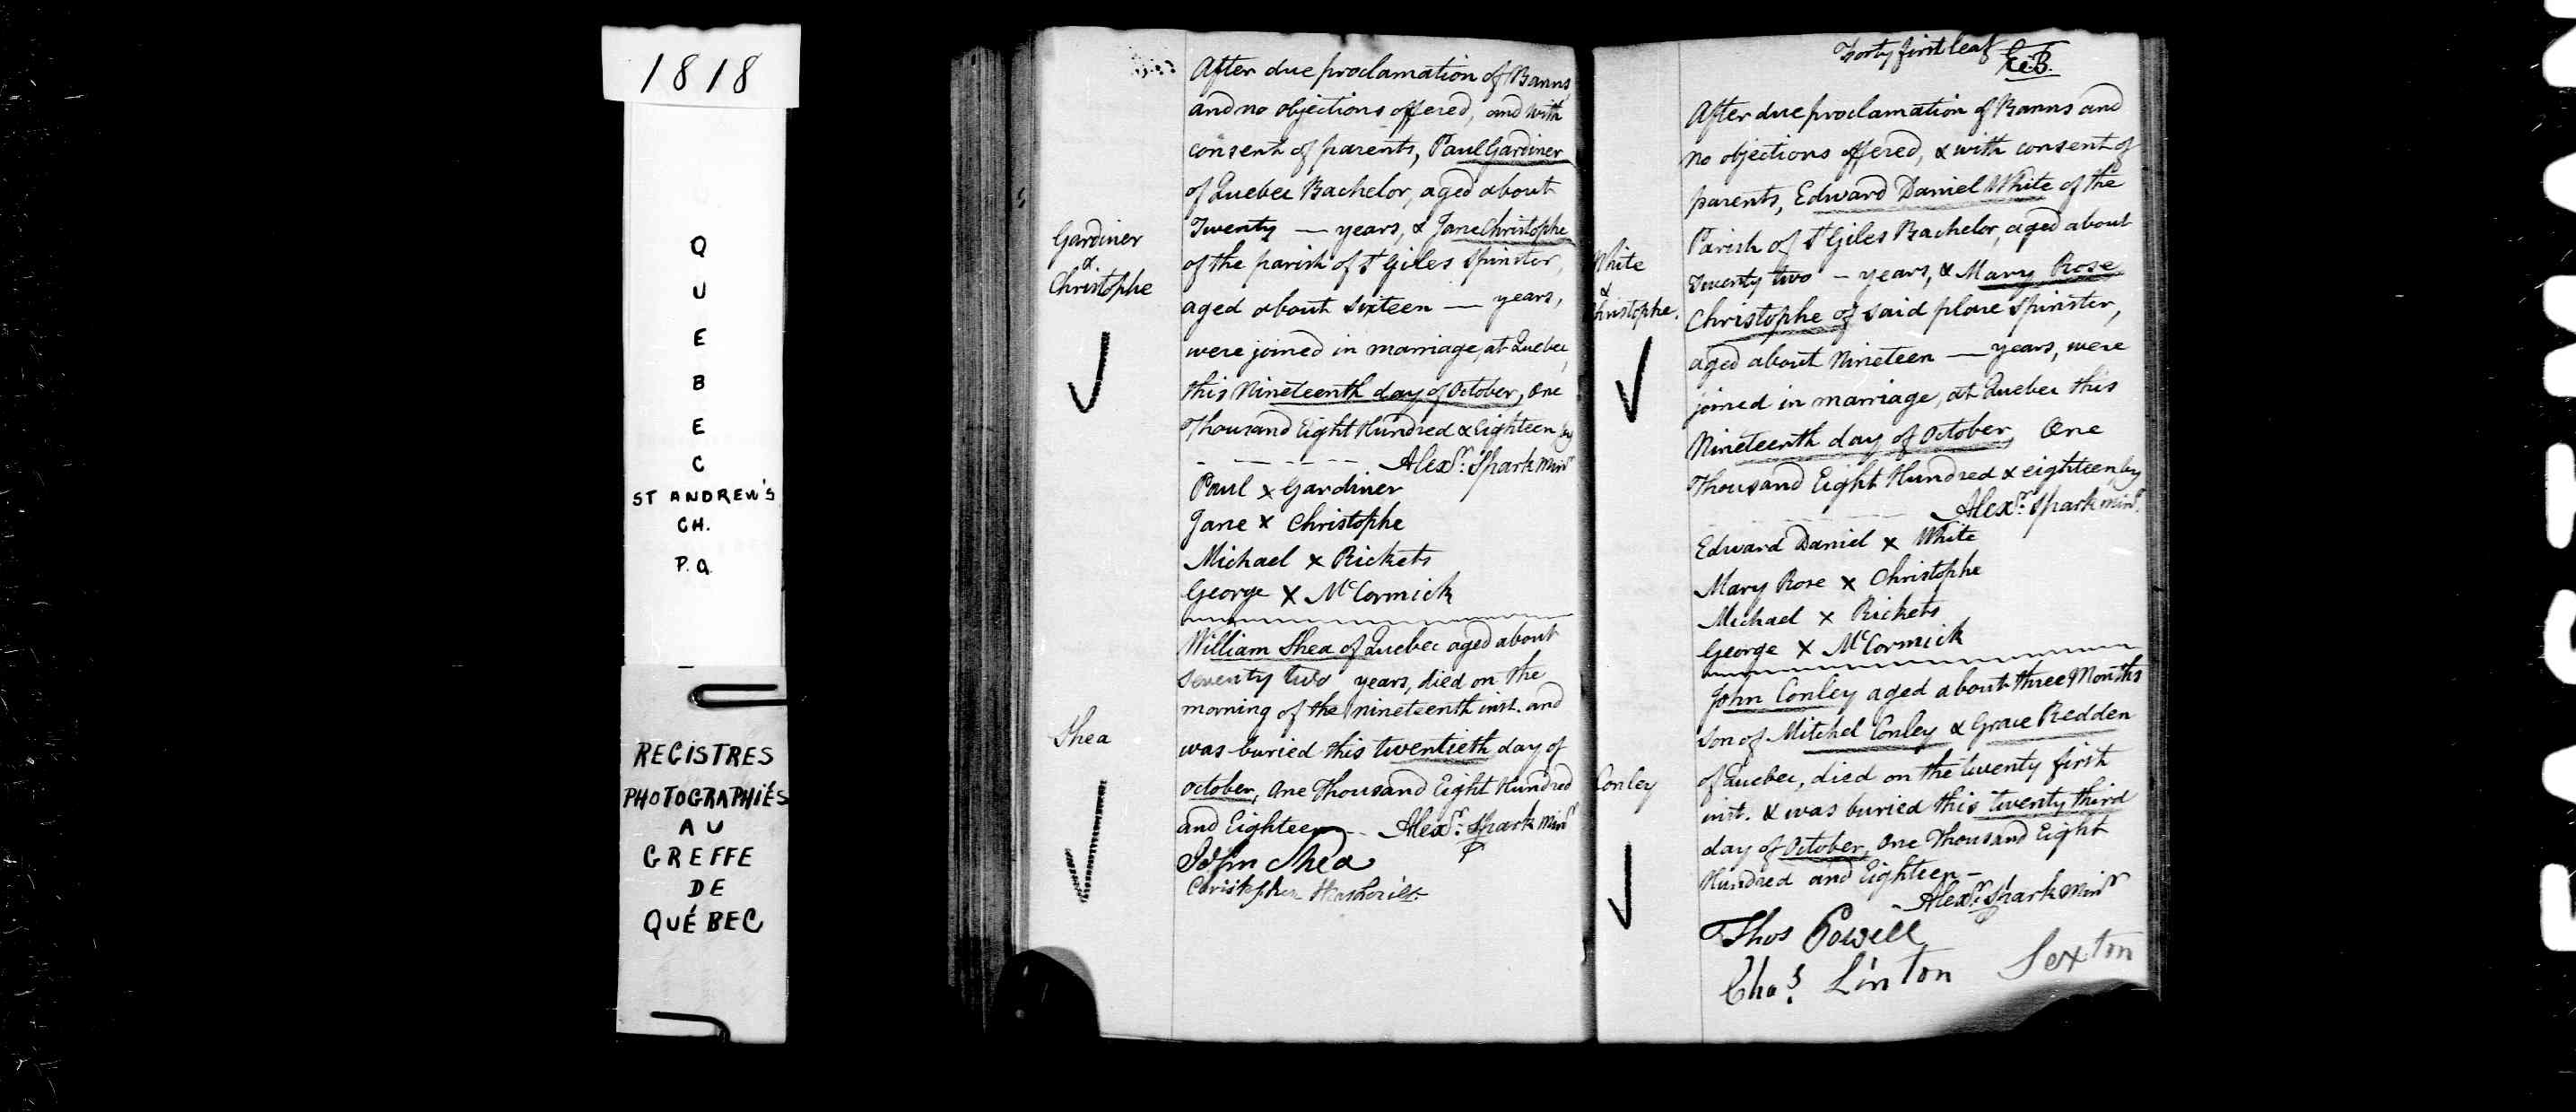 Acte de mariage: Tiré des registres de Saint-Andrew's Church de Québec de 1818, p. 41